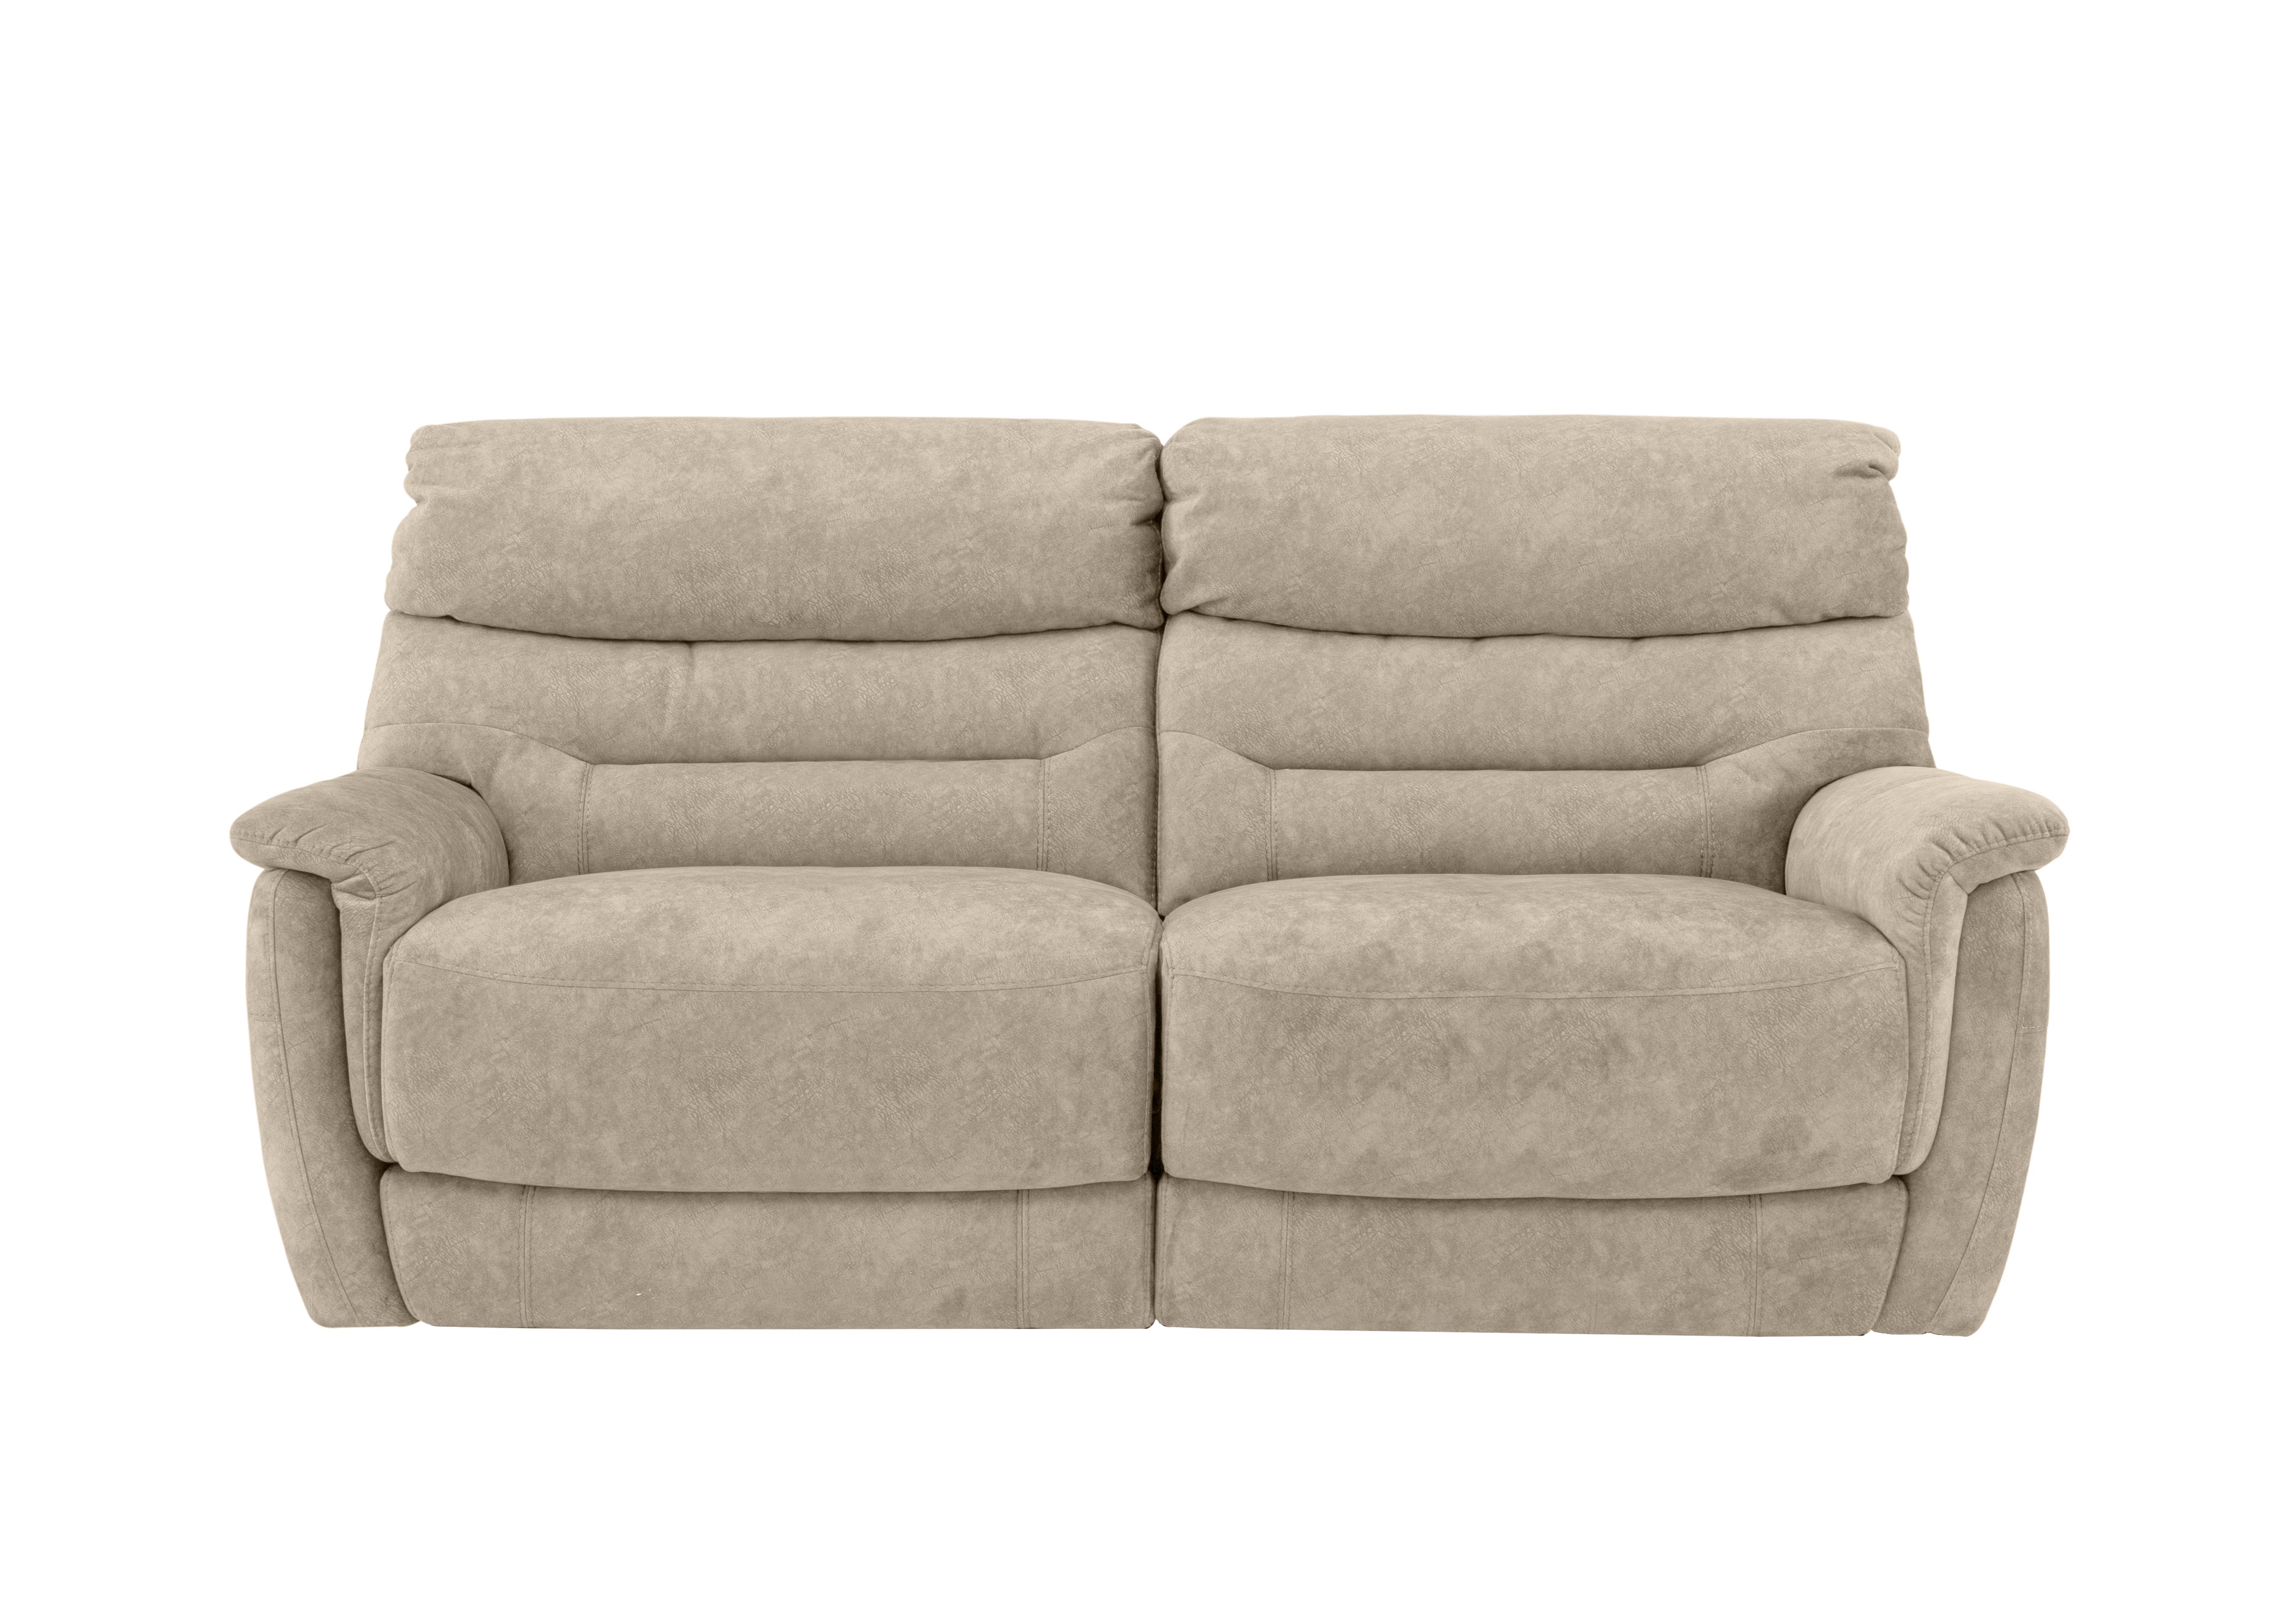 Chicago 3 Seater Fabric Sofa in Bfa-Bnn-R26 Cream on Furniture Village